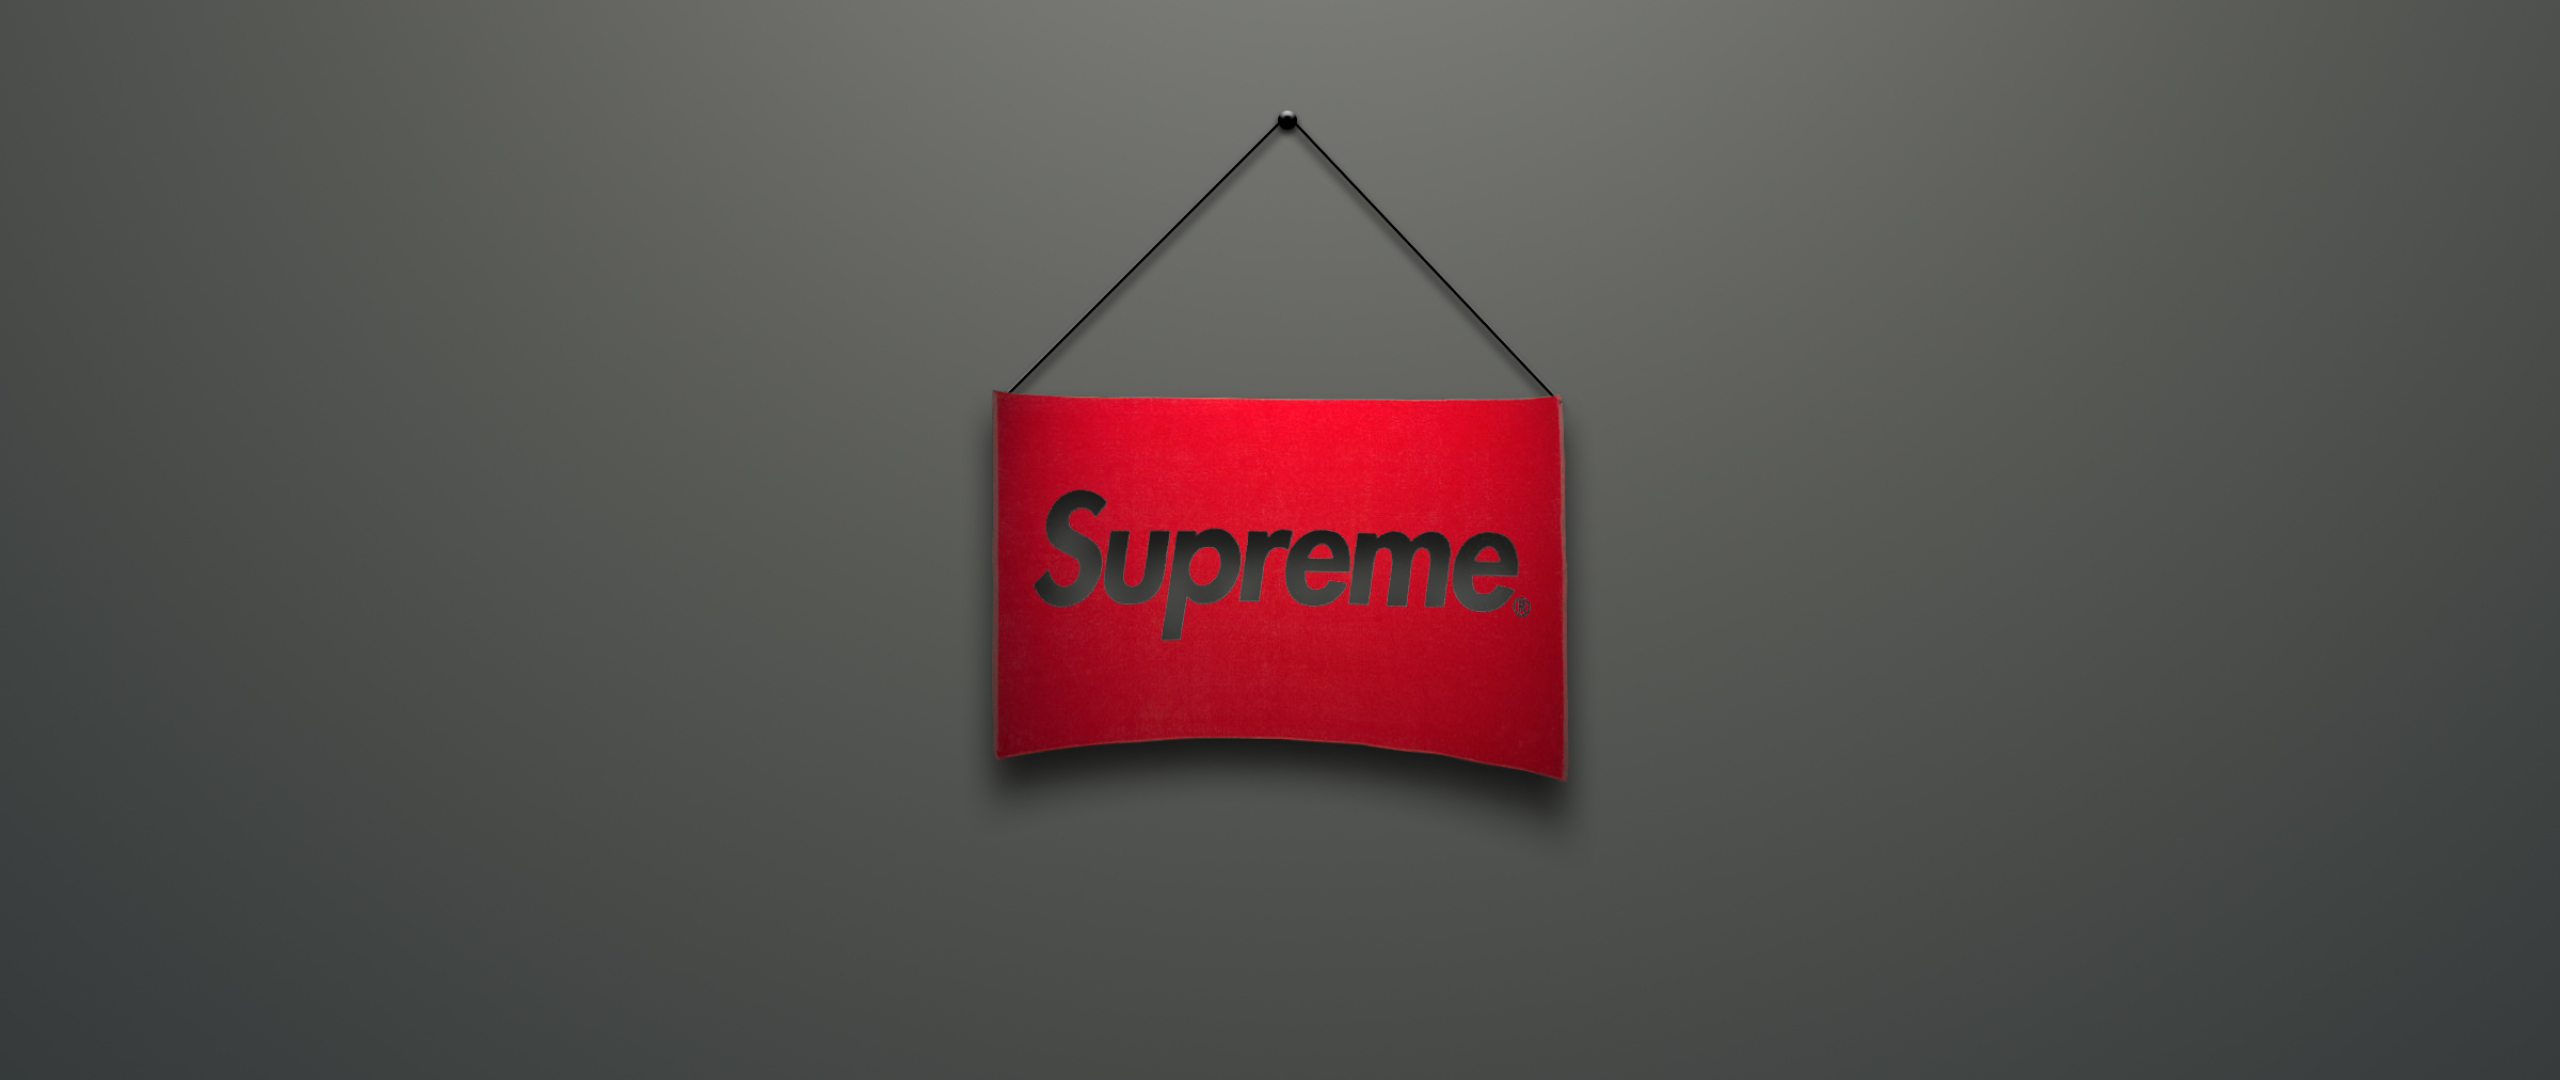 2560x1080 Supreme Logo Red 2560x1080 Resolution Wallpaper Hd Brands